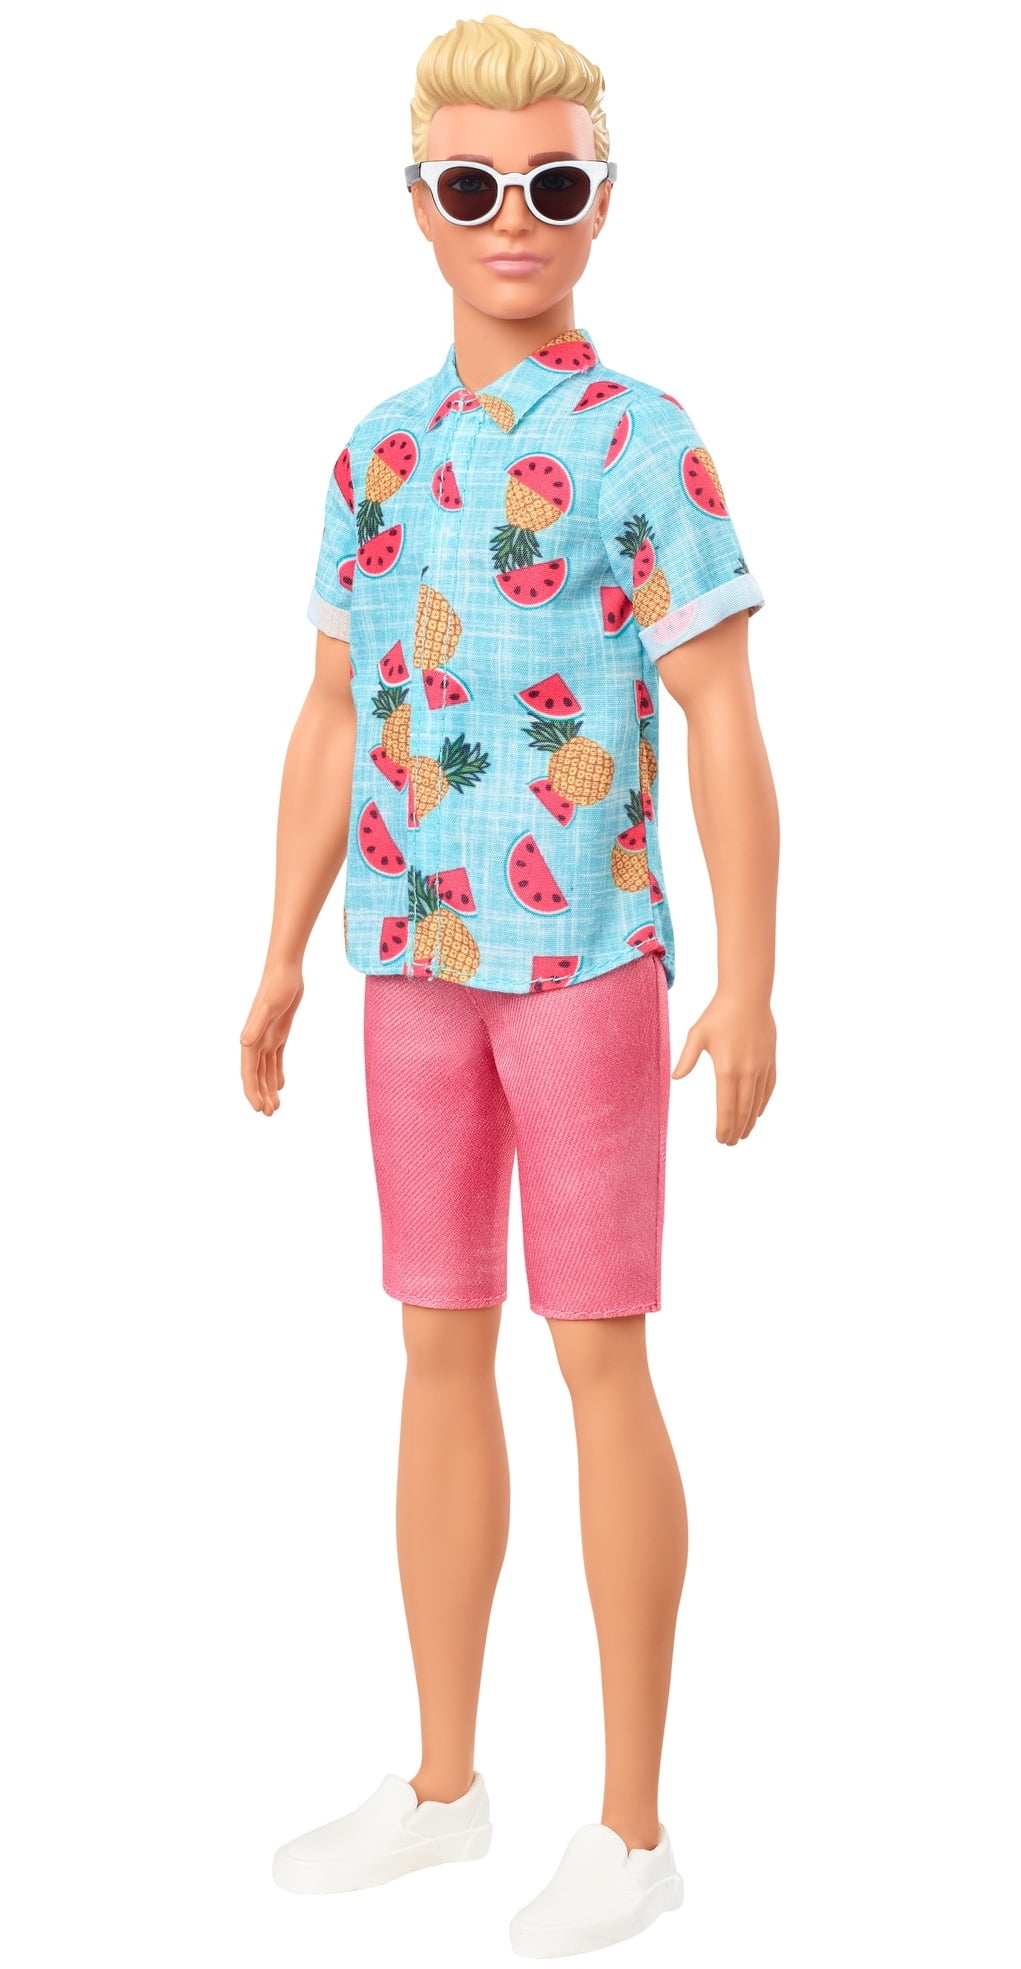 Barbie Ken Clothes Tshirt Cactus Graphic Tee Fashionista Doll Top 